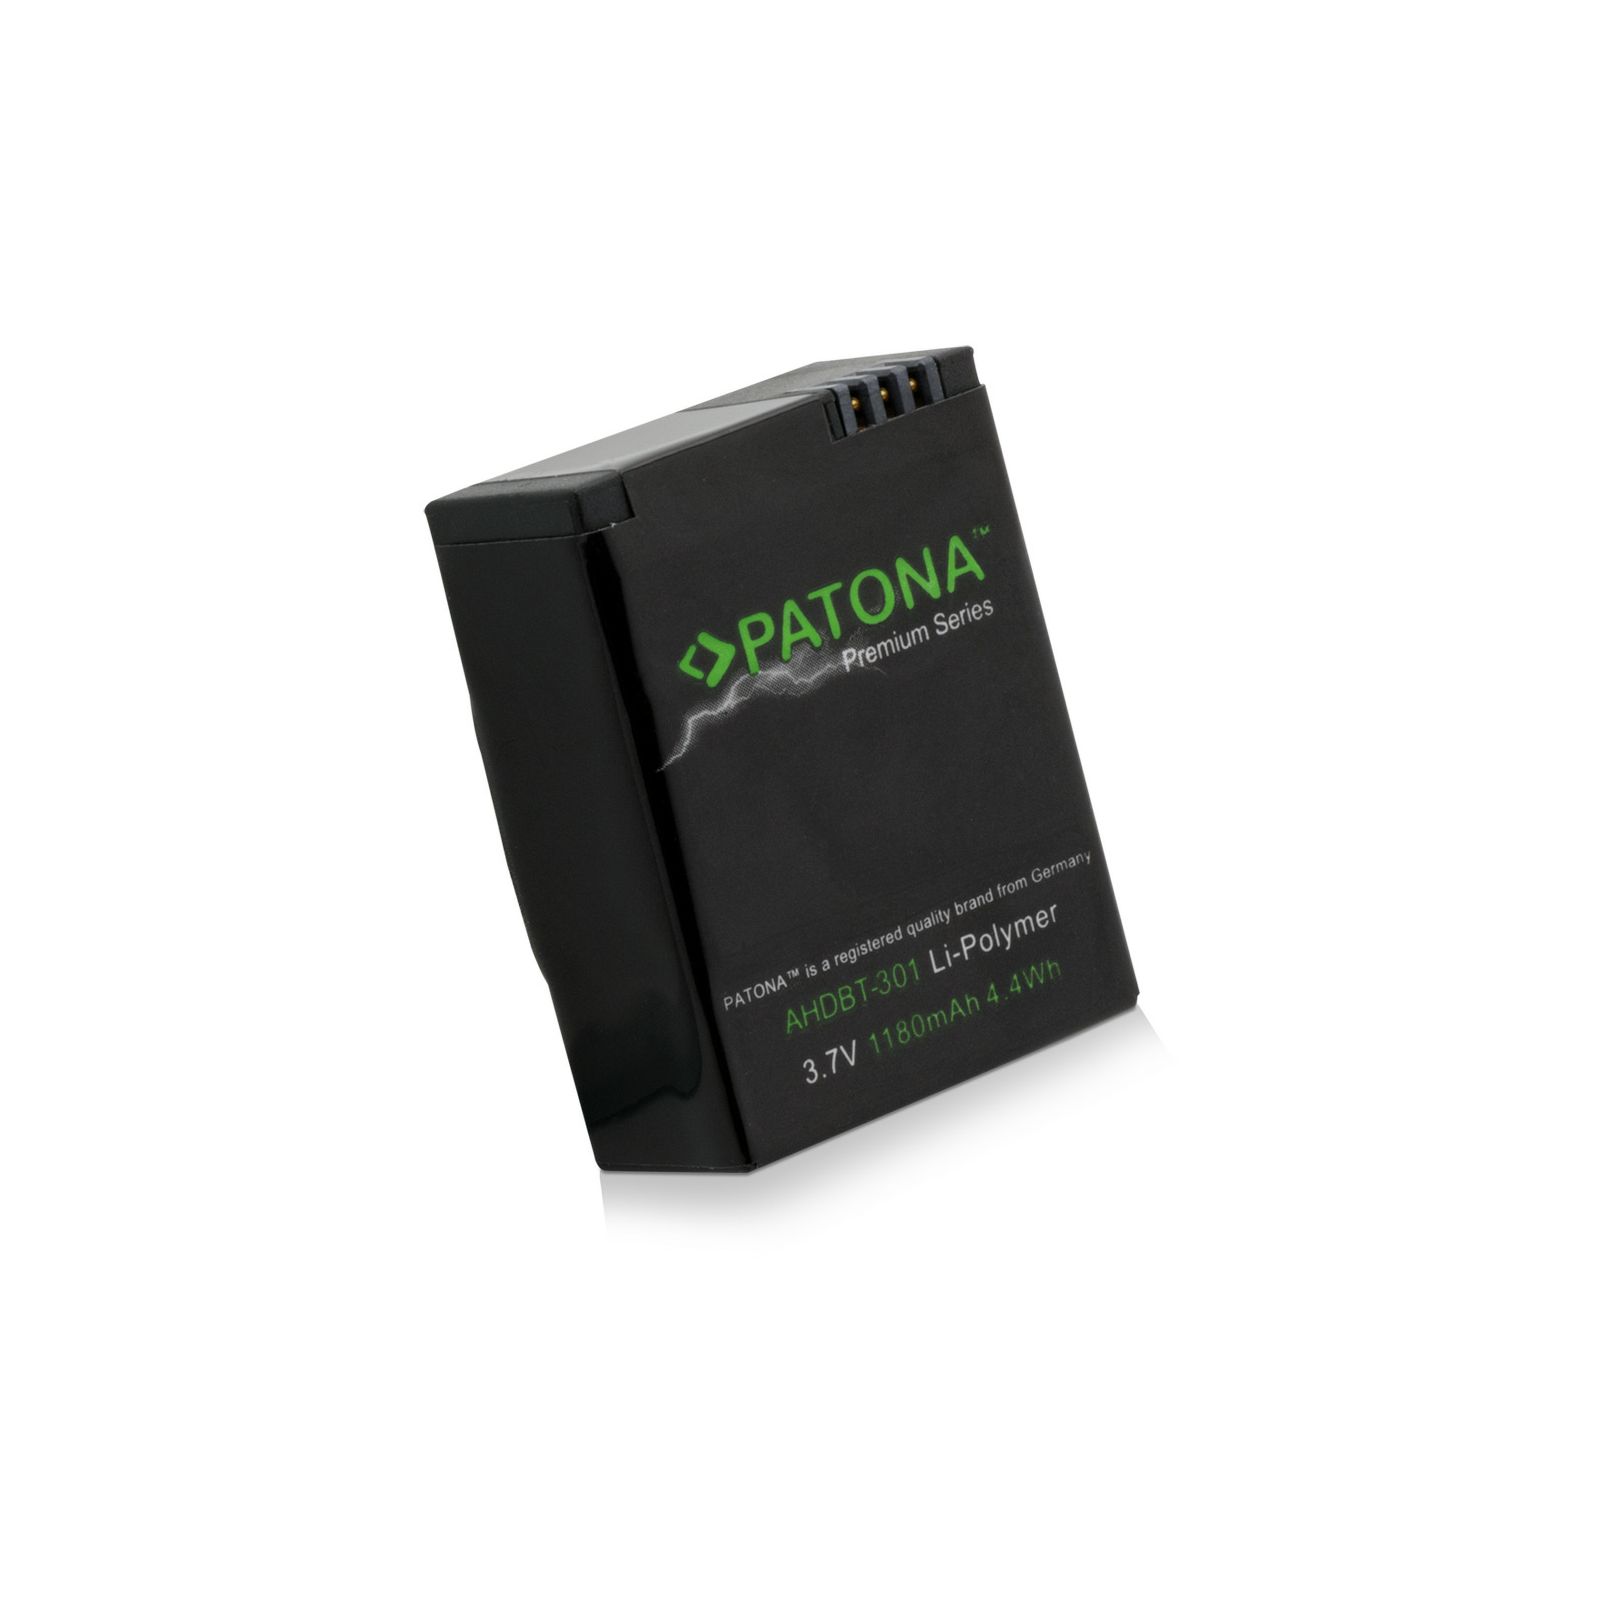 Patona Premium baterija za GoPro Hero3+ AHDBT-201, AHDBT-301, AHDBT-302, AHDBT201, AHDBT301, AHDBT-302 1180mah 4.4Wh 3.7V